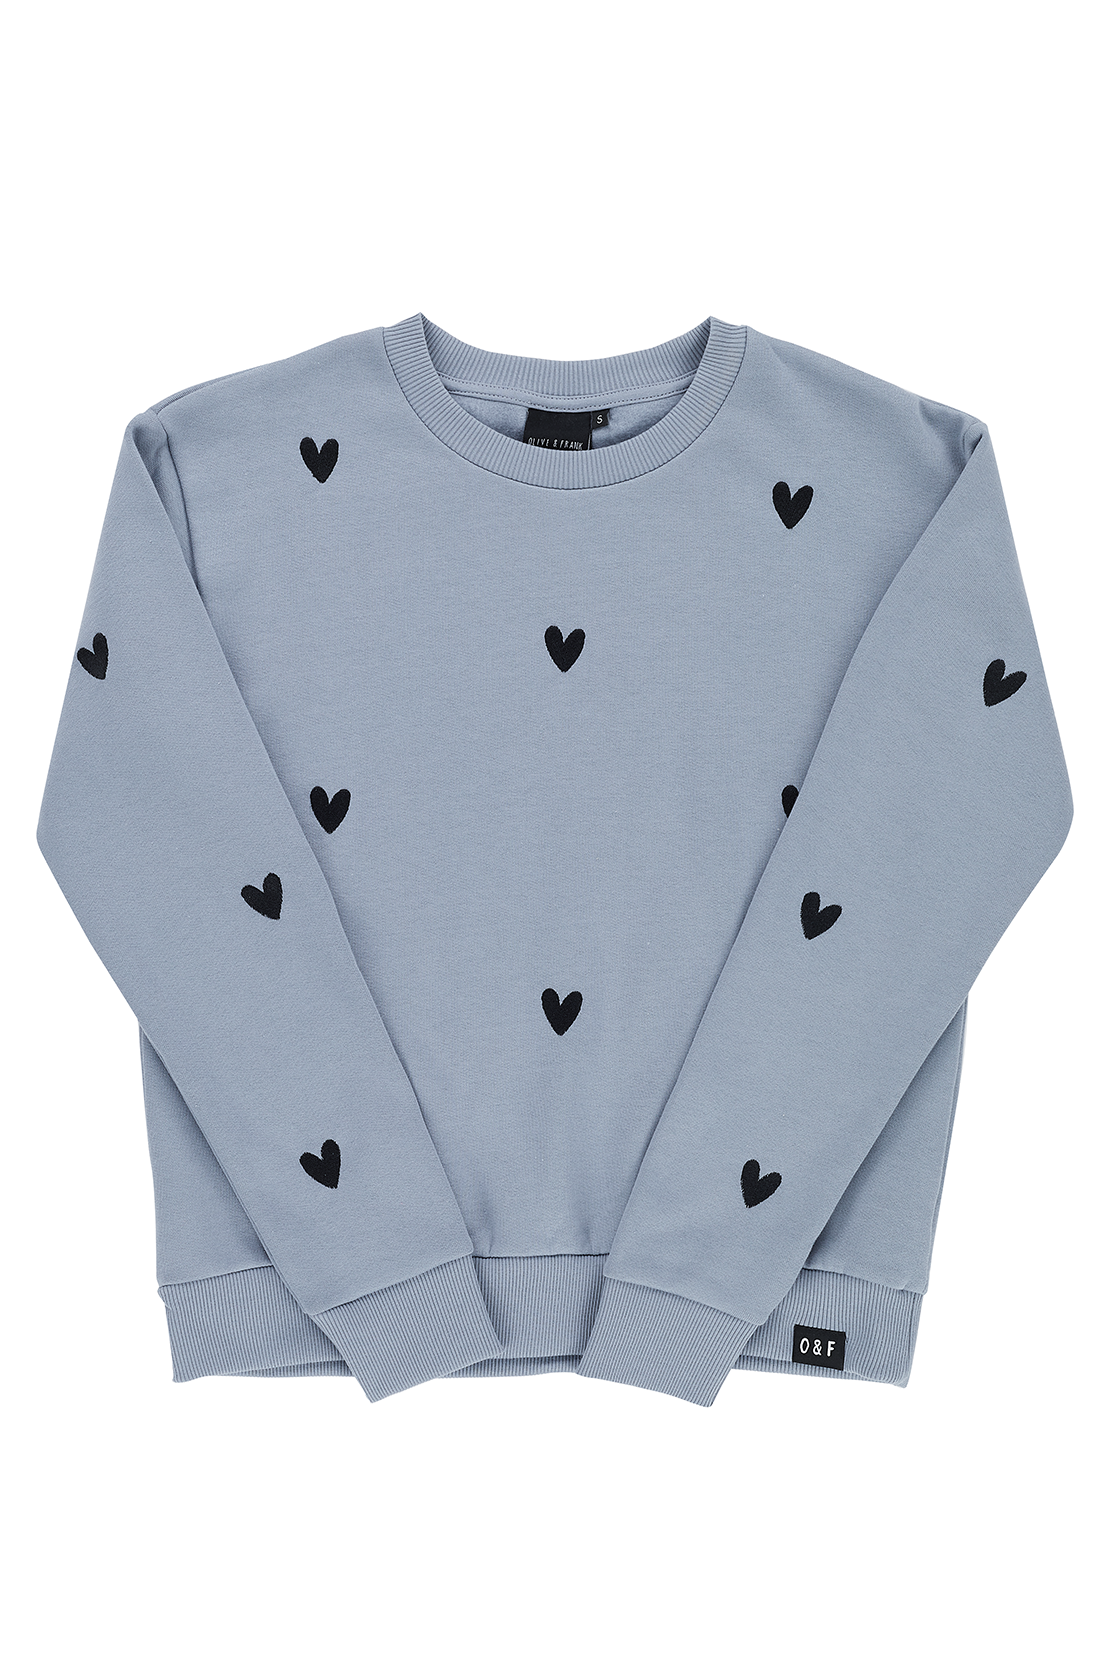 O&F Heart Embroidered Sweatshirt - Blue/Grey